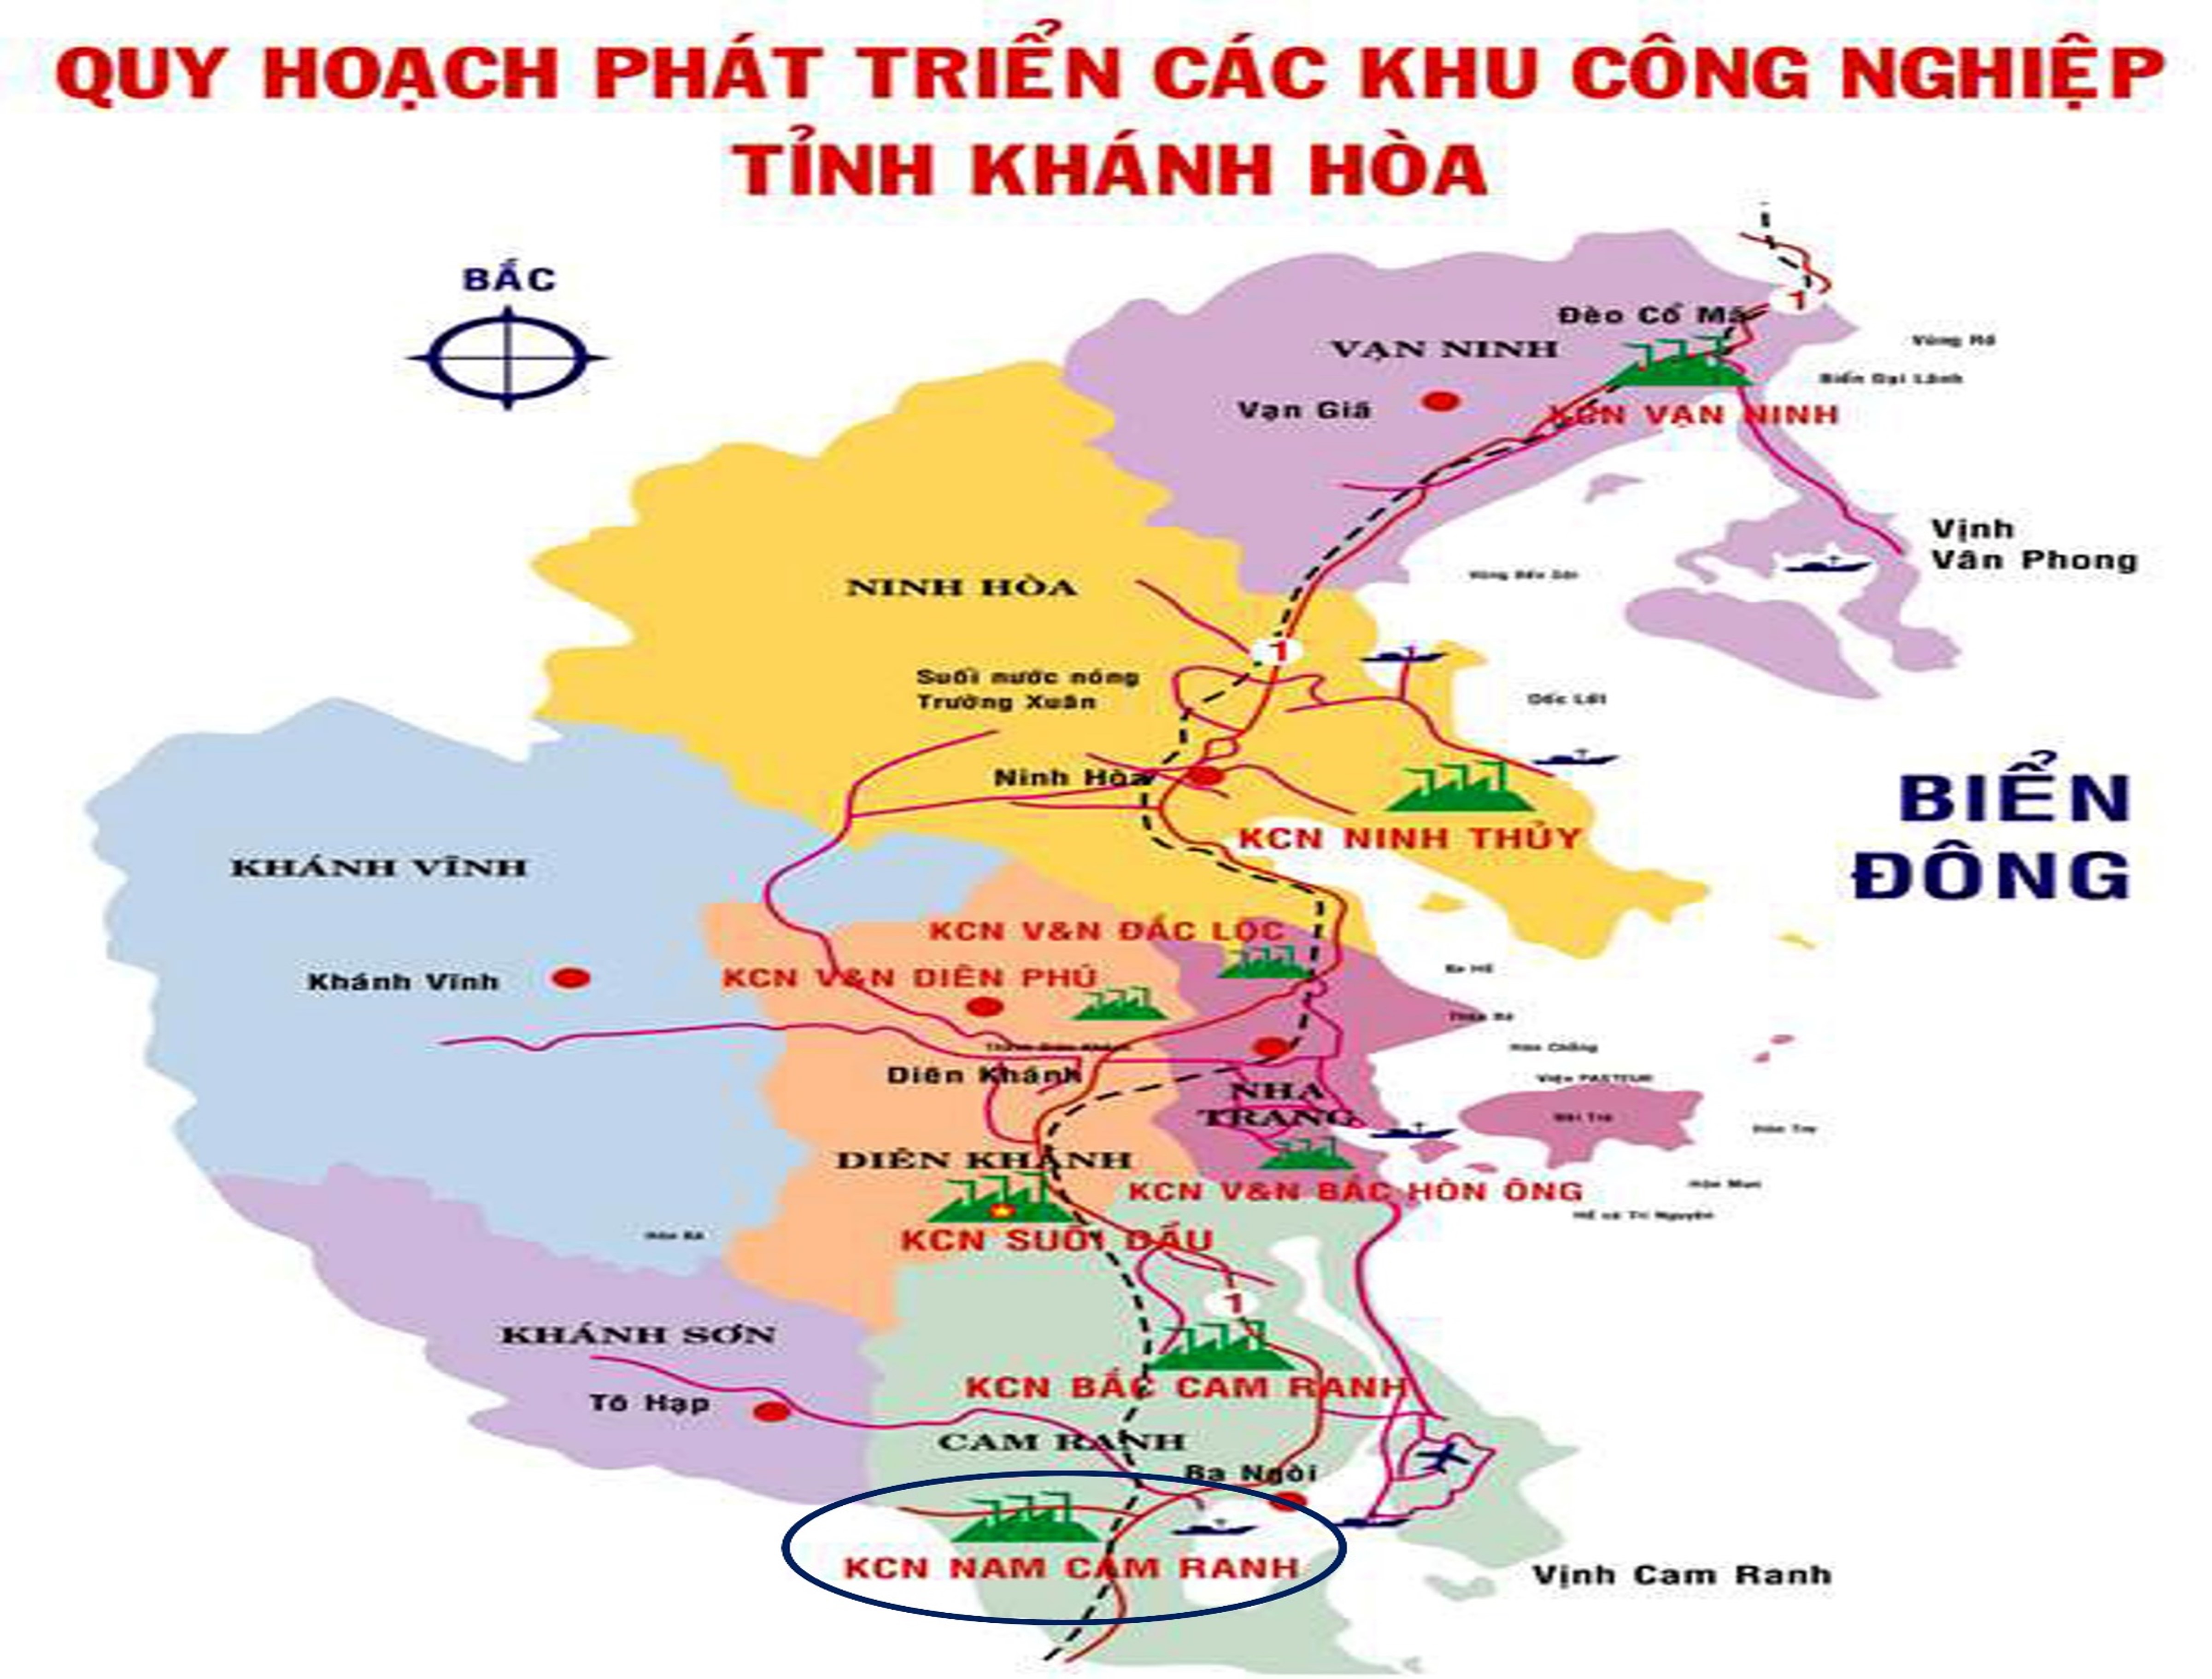 KCN Nam Cam Ranh